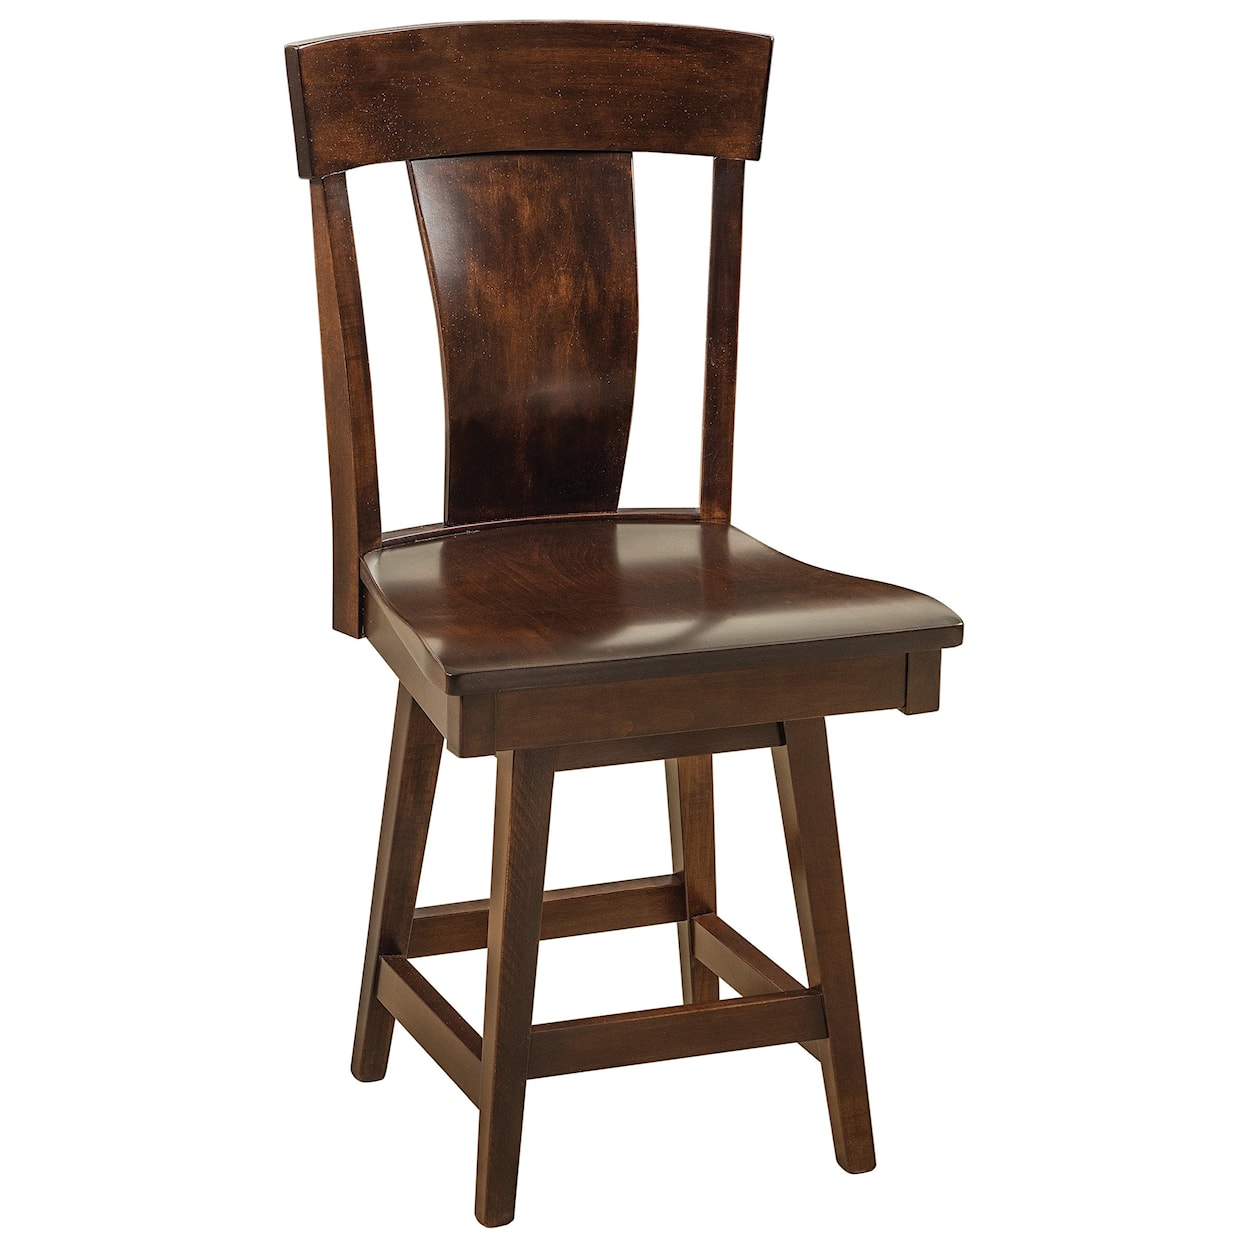 F&N Woodworking Baldwin Swivel Bar Stool - Wood Seat